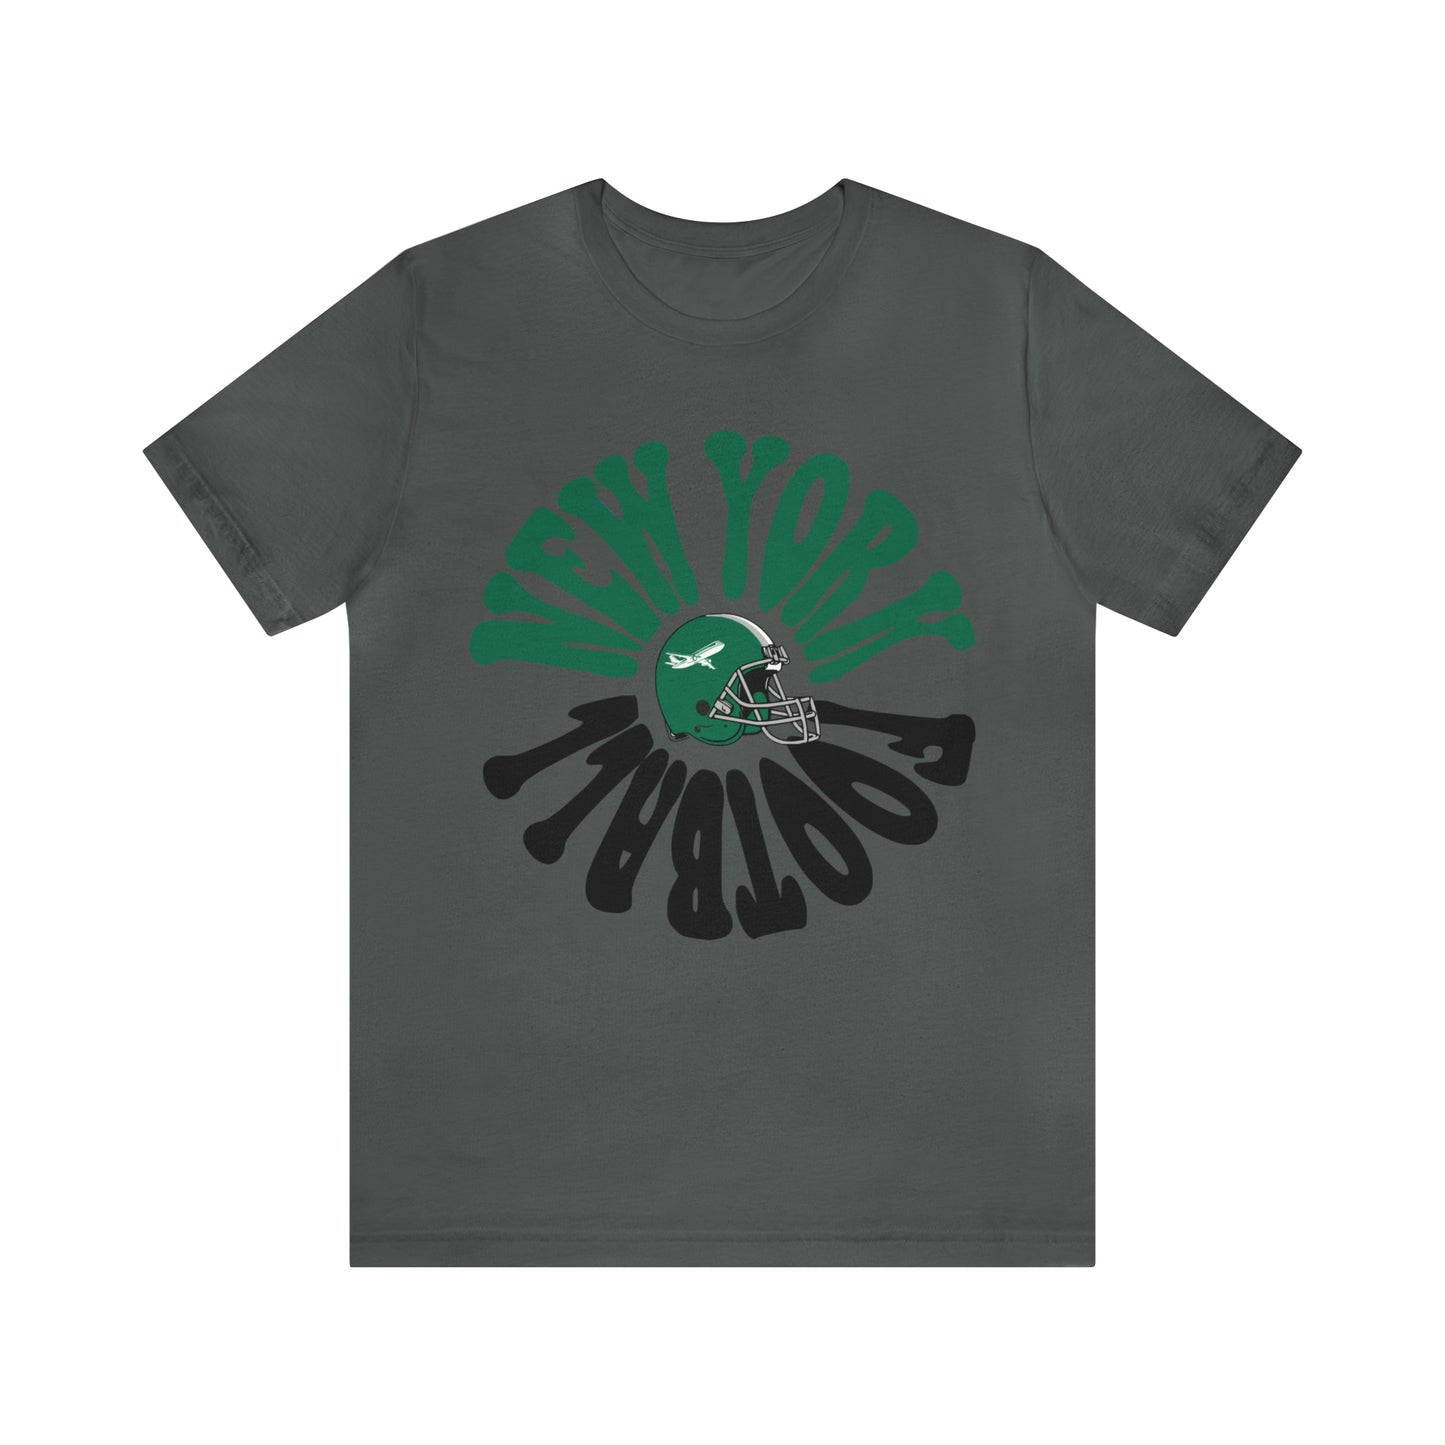 Hippy Retro New York Jets Football Tee - Retro Football T-Shirt Apparel - Men's & Women's Unisex Sizing